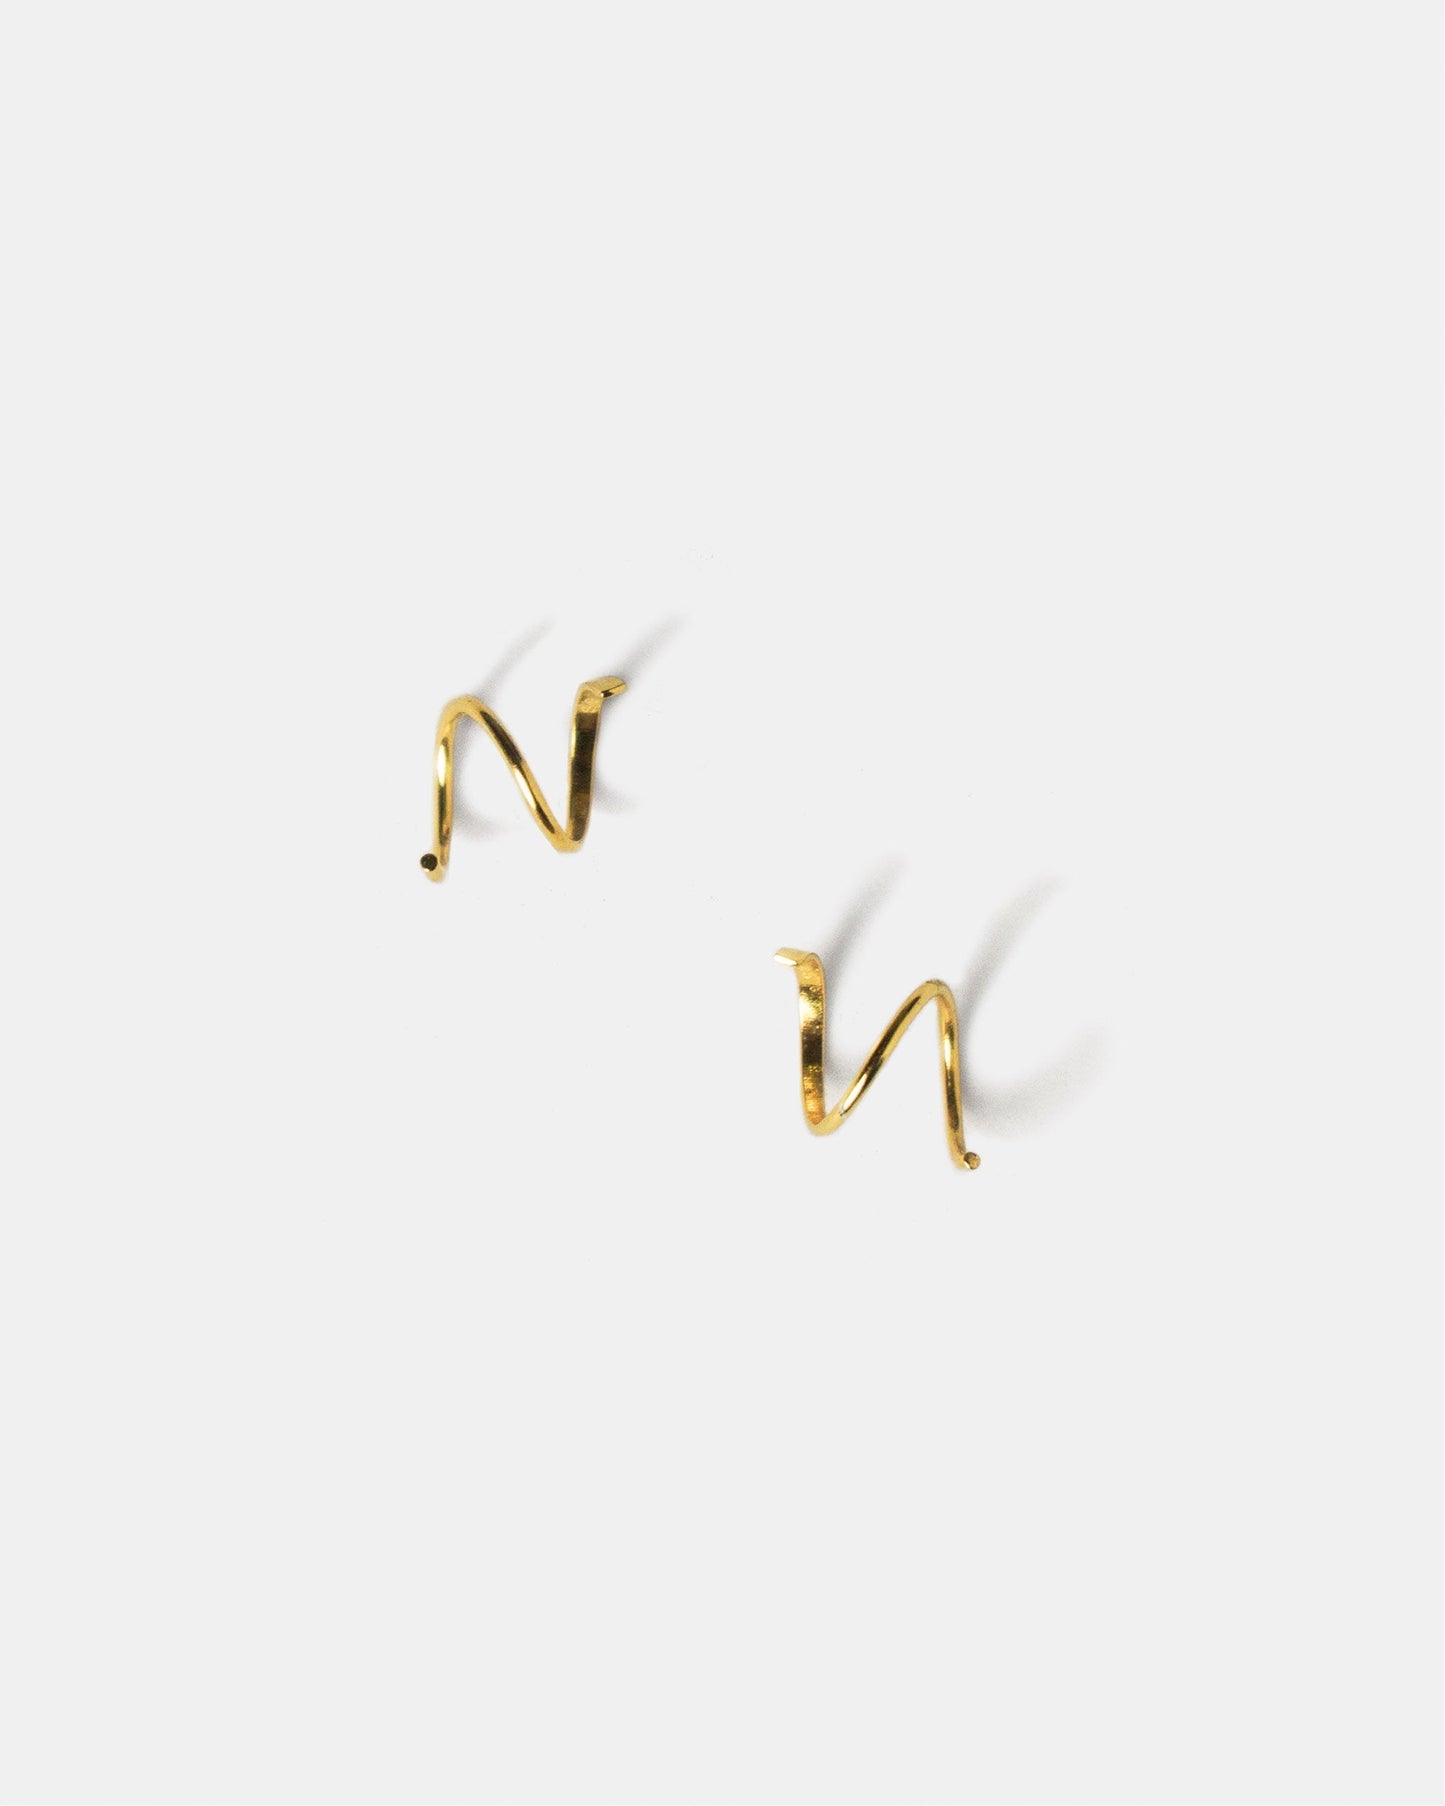 [Reject] Spiral Earrings in Gold